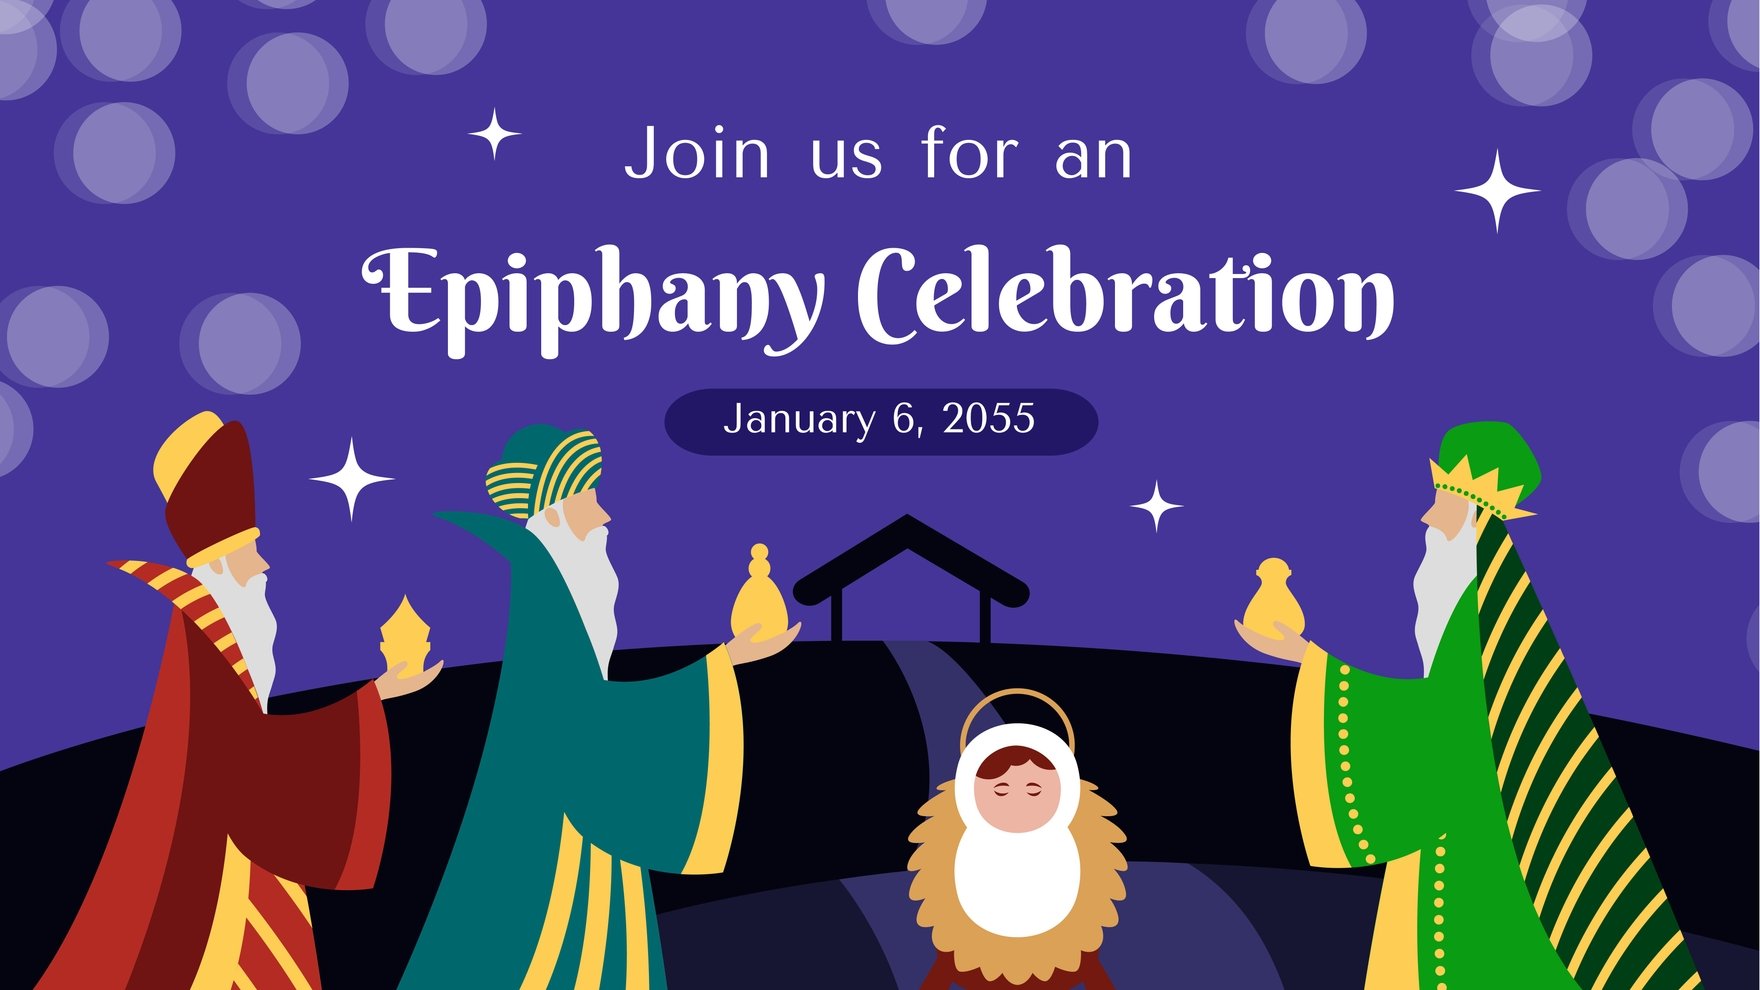 Epiphany Day Invitation Background